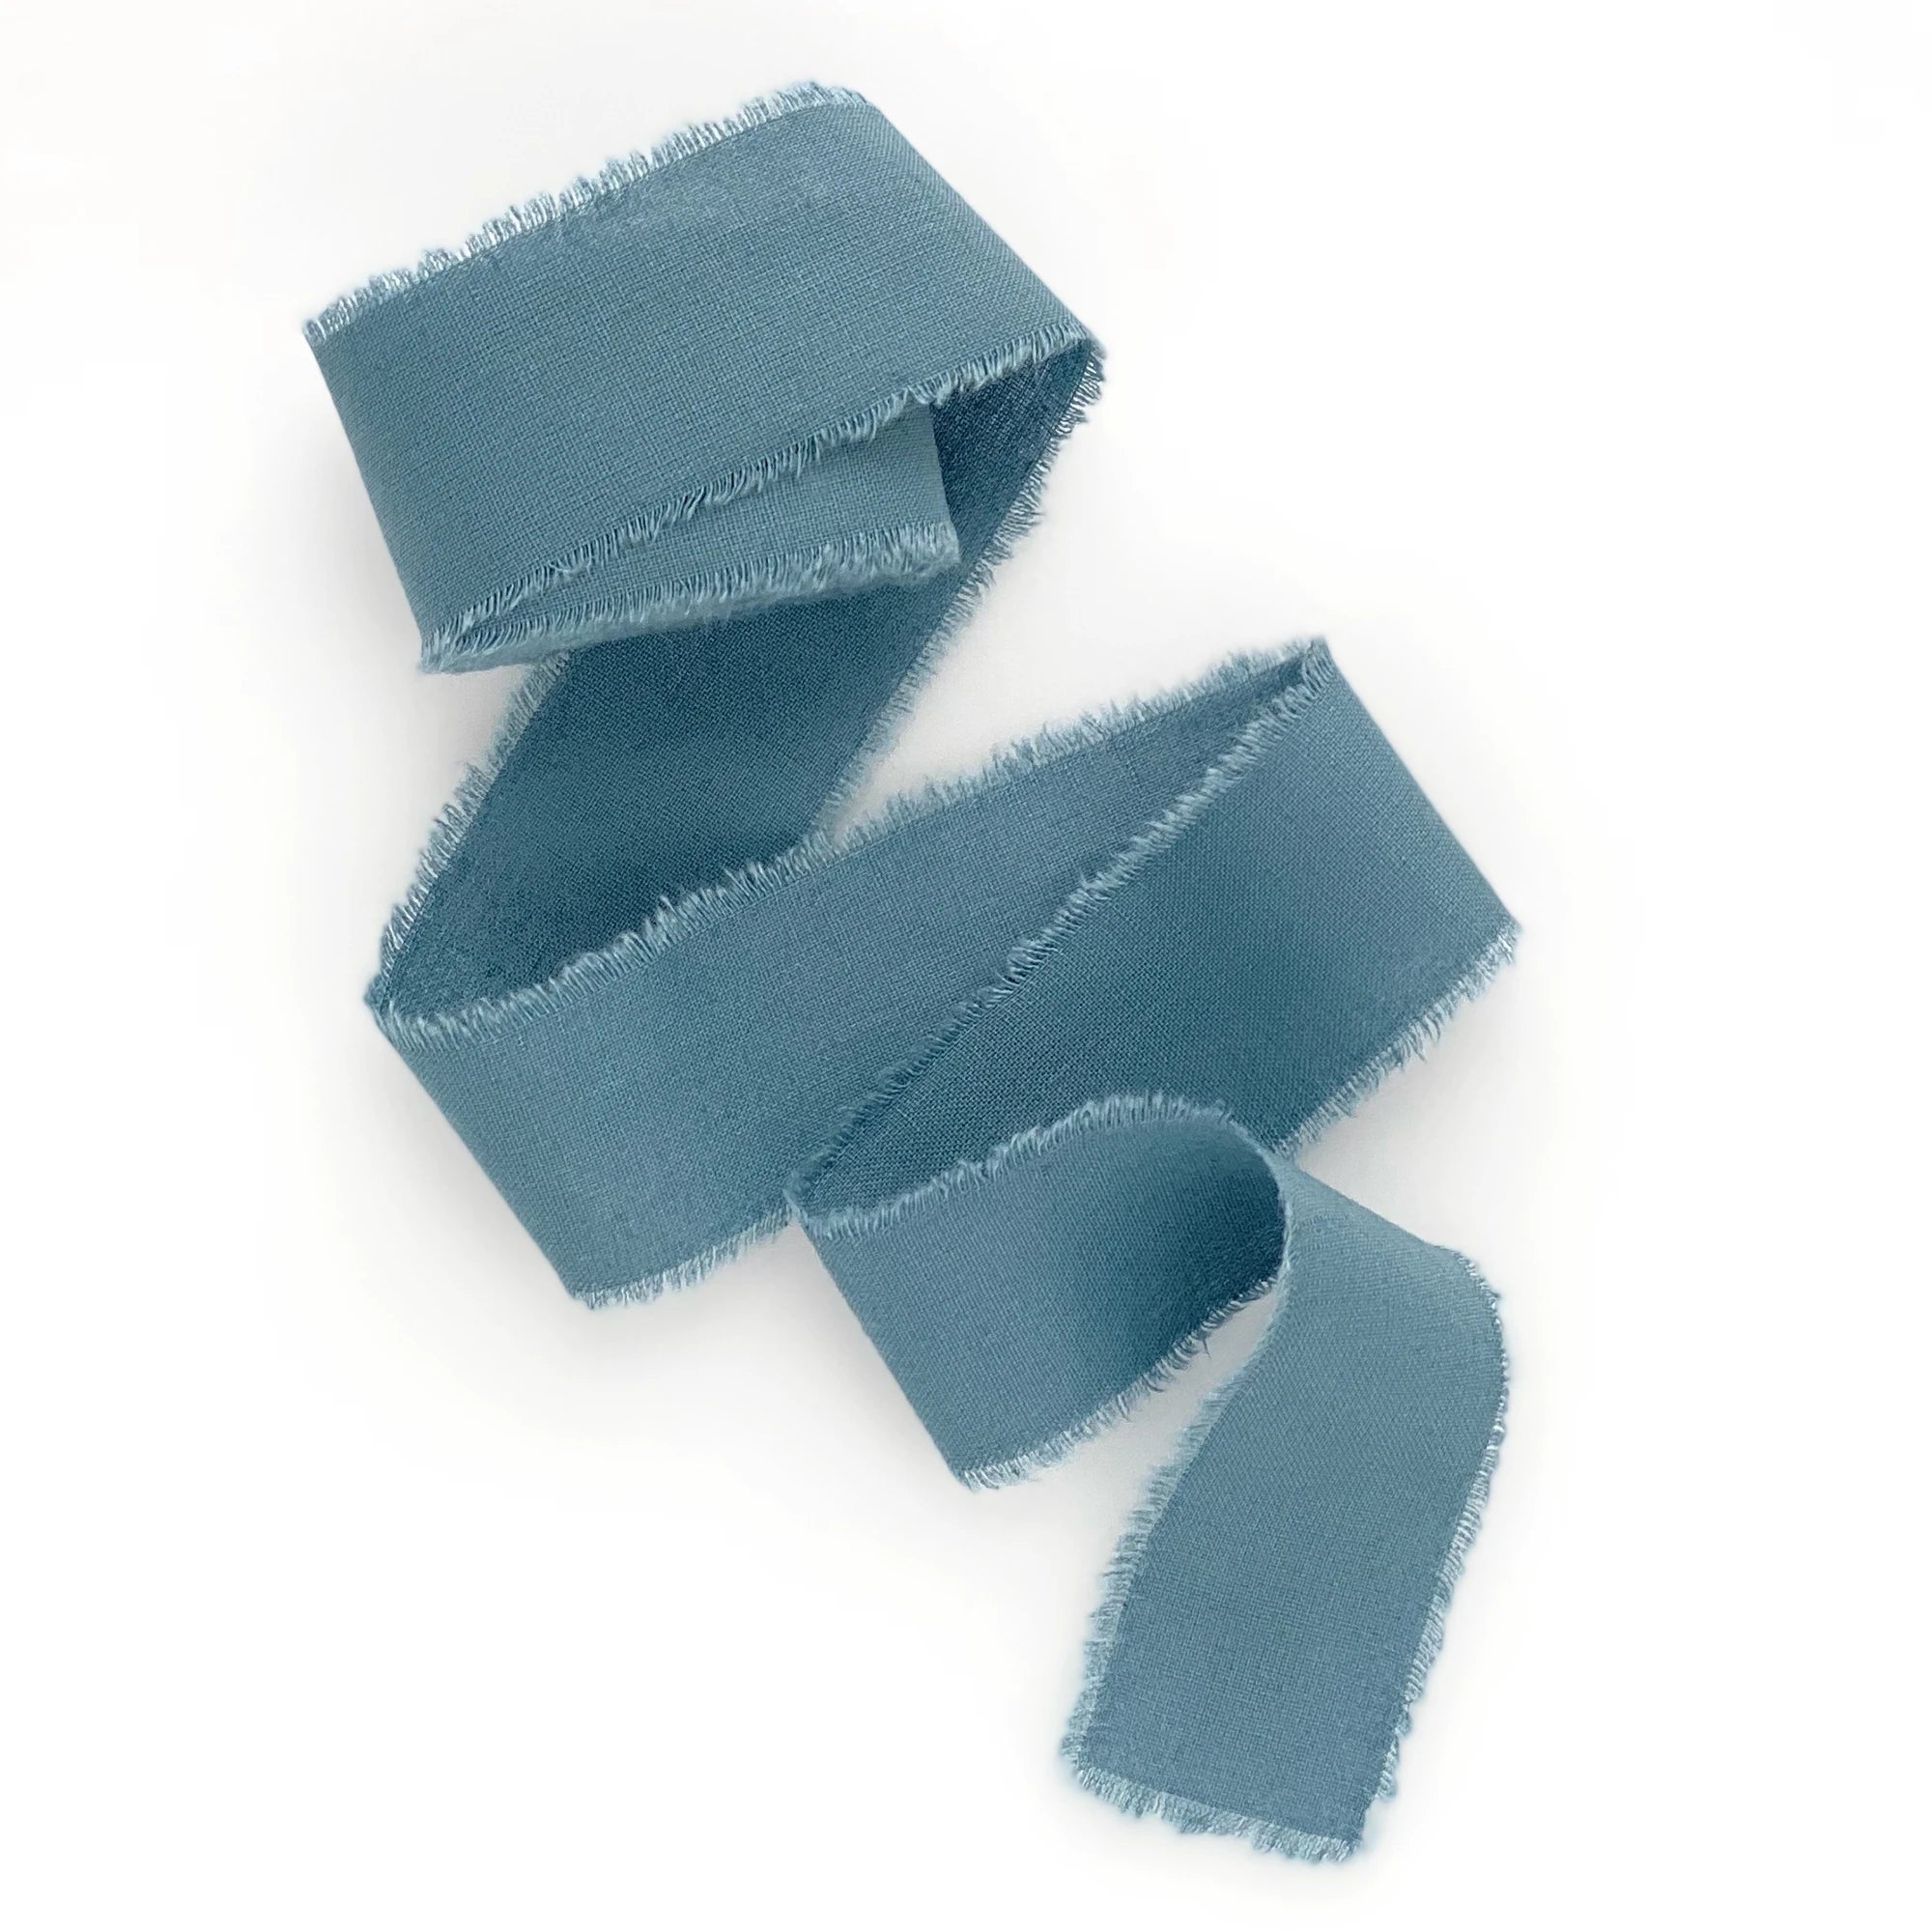 Slate blue silk cotton handmade ribbons 1 inch width on white